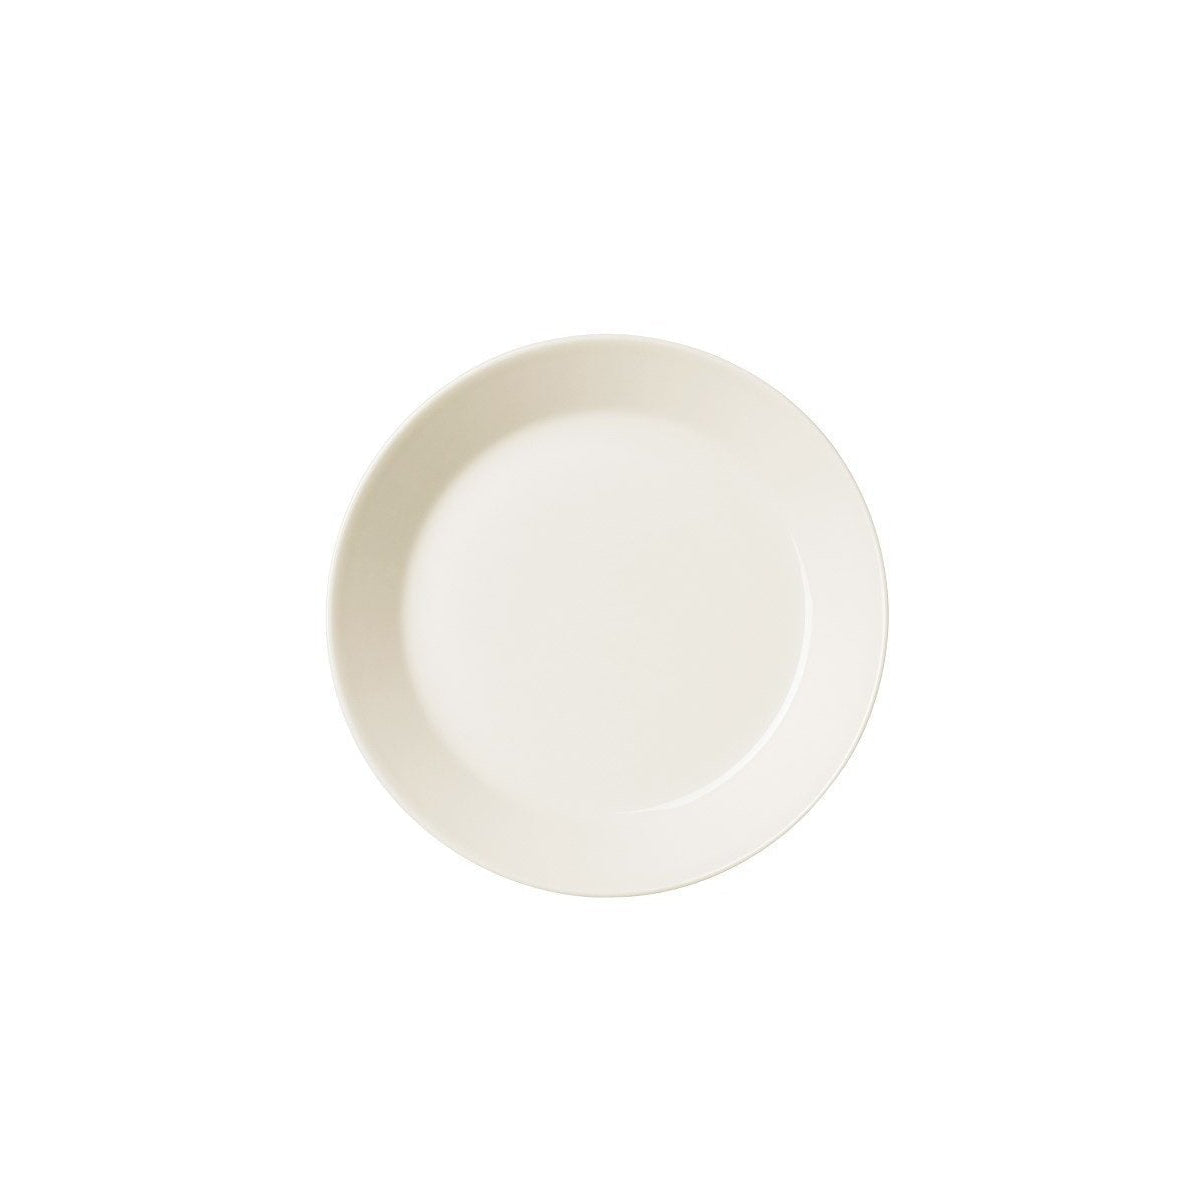 Iittala Plaque teema plate blanc, 17 cm